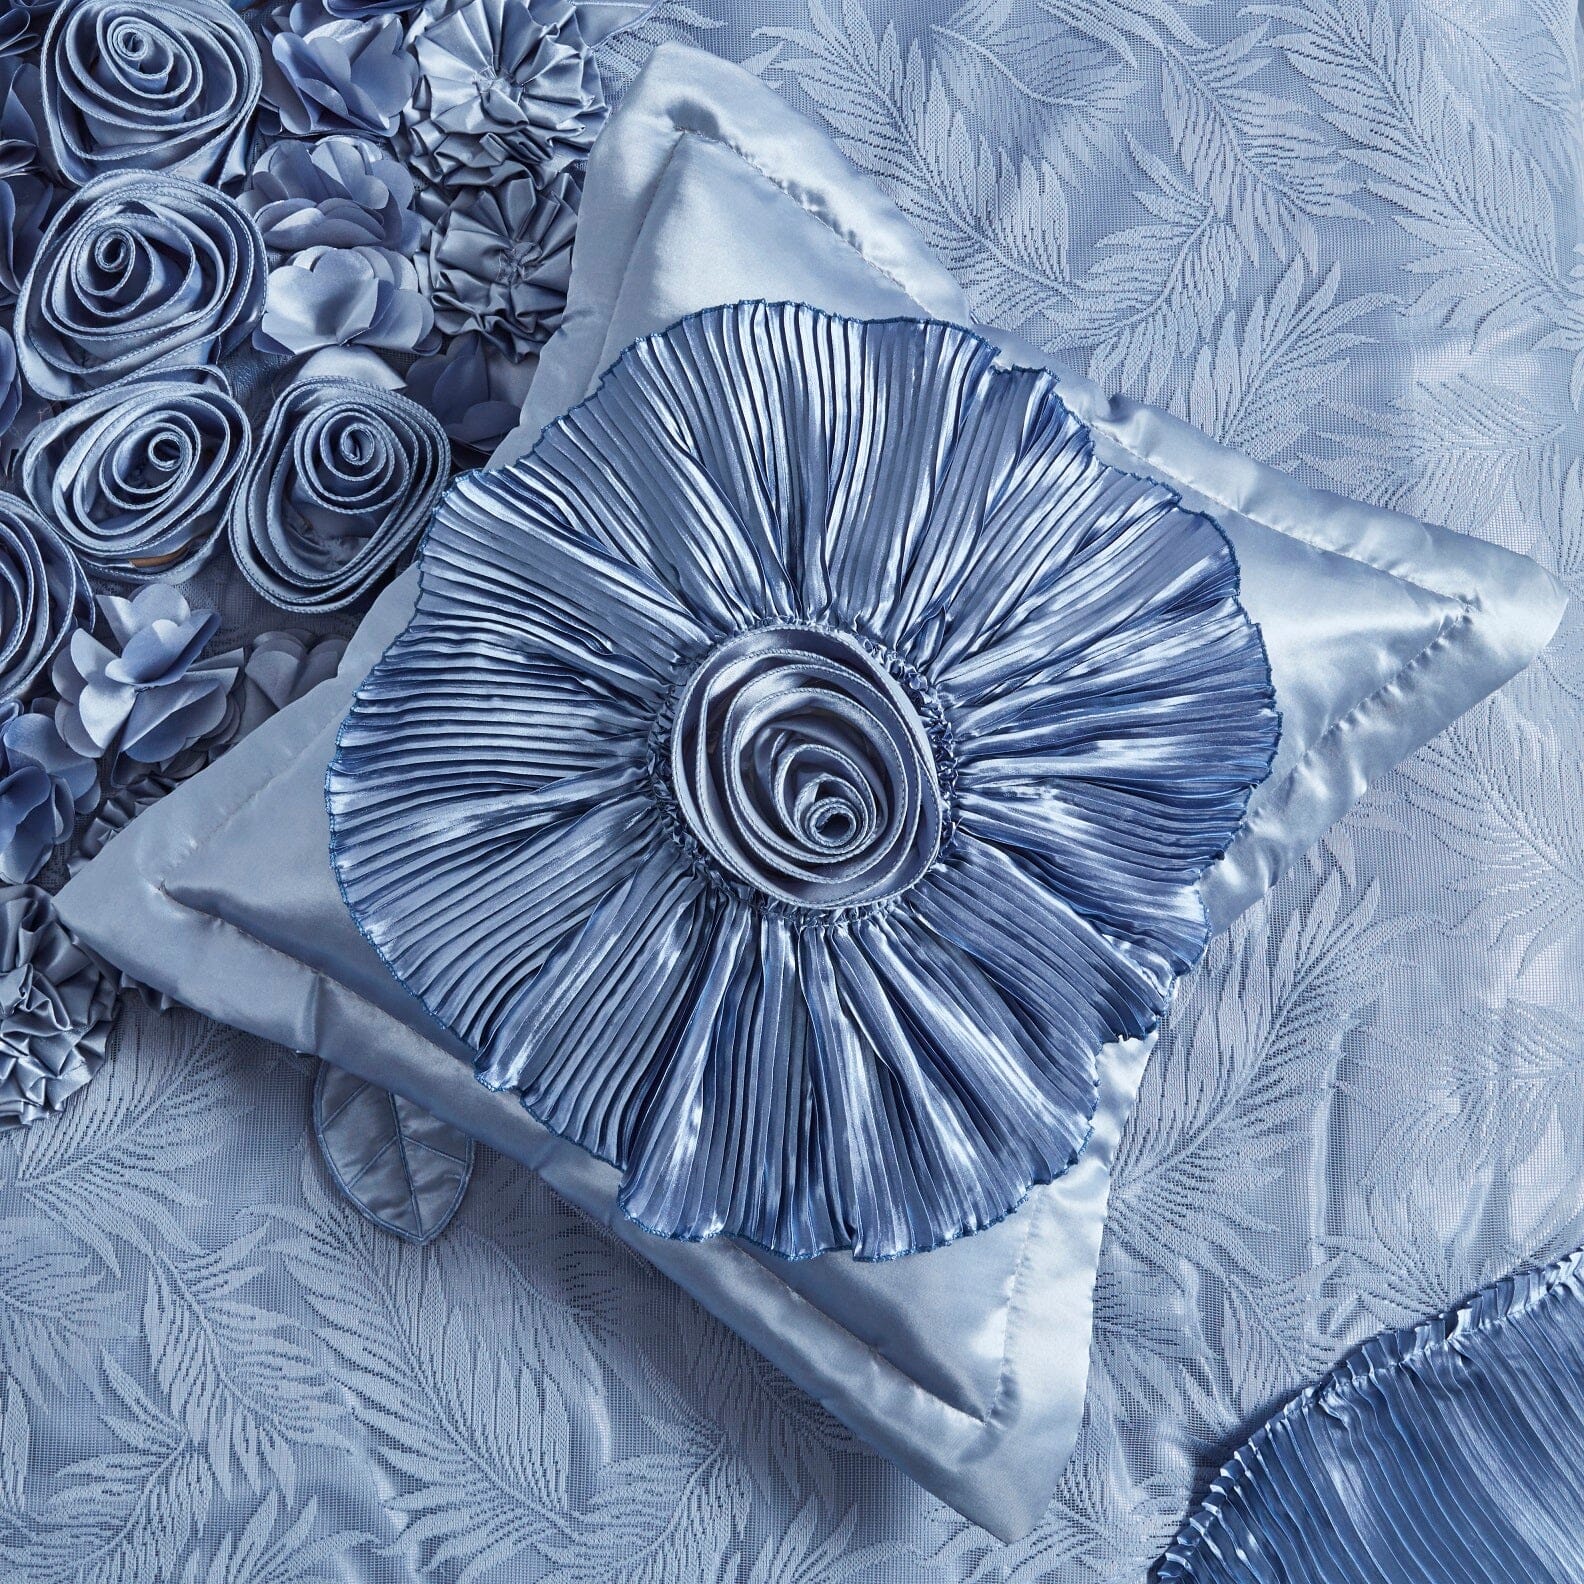 Tache Satin Floral Lace Ruffle Sweet Victorian Luxurious Blue Comforter Set Wedding Bedding Blanket Quilt Duvet (MZ002-Blue)